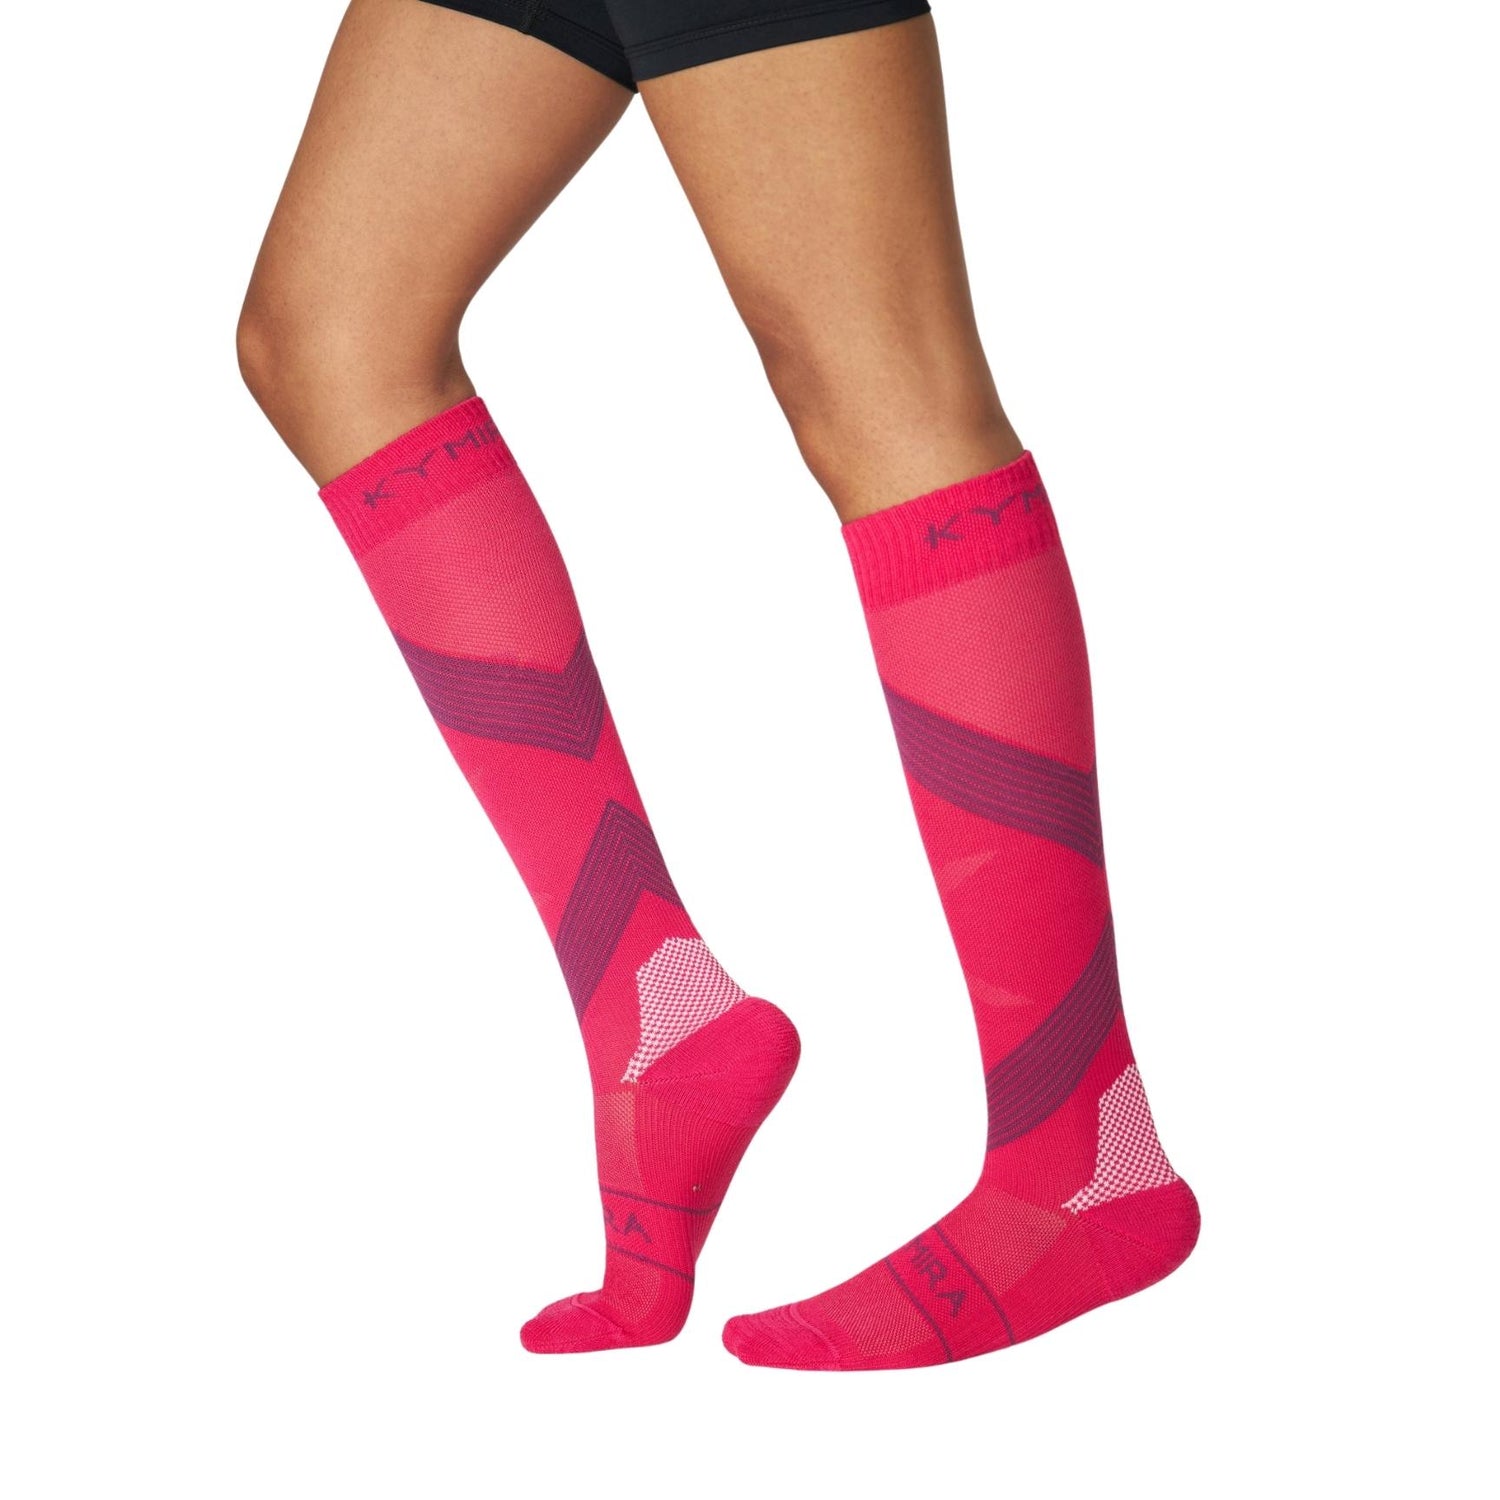 KYMIRA Infrared Compression Socks - Pink/Purple